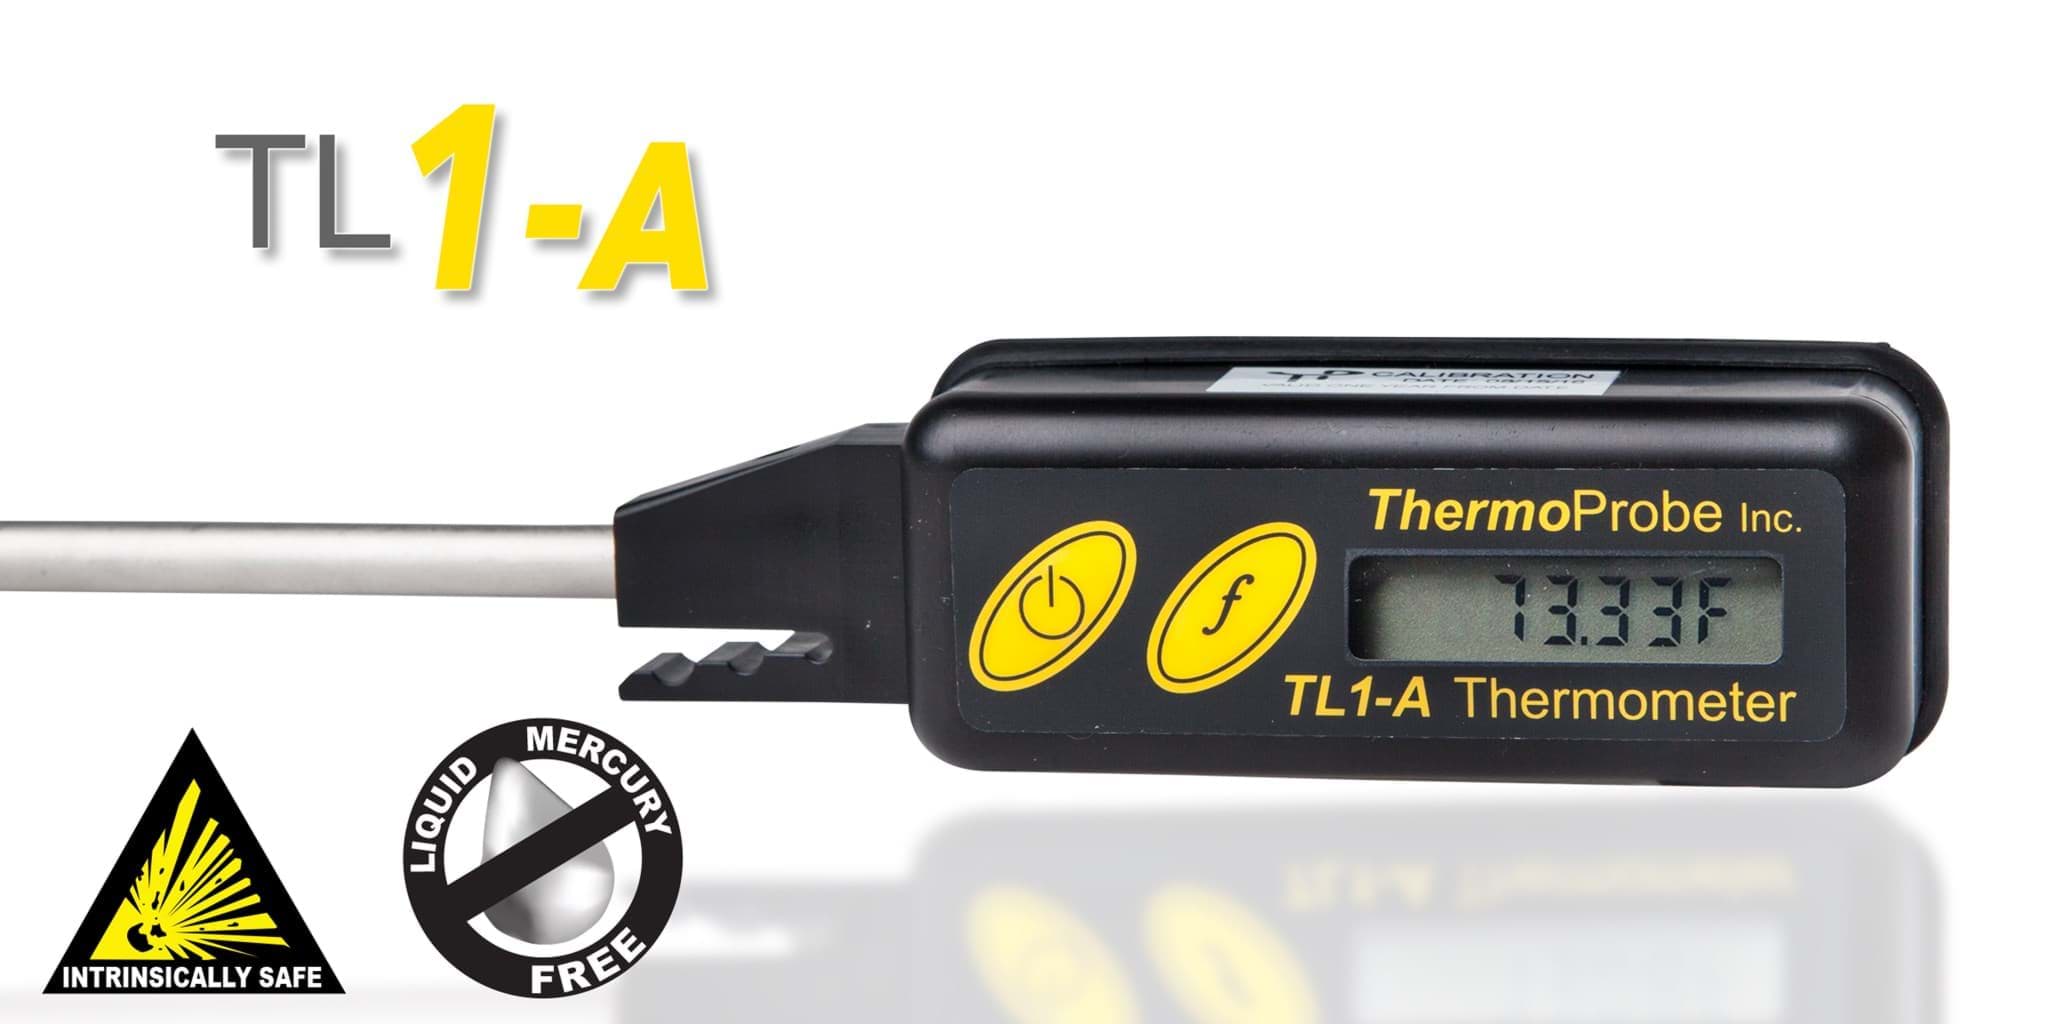 https://parkesscientific.com/media/image/487/thermoprobe-tl1a-digital-stem-thermometer-487.jpg